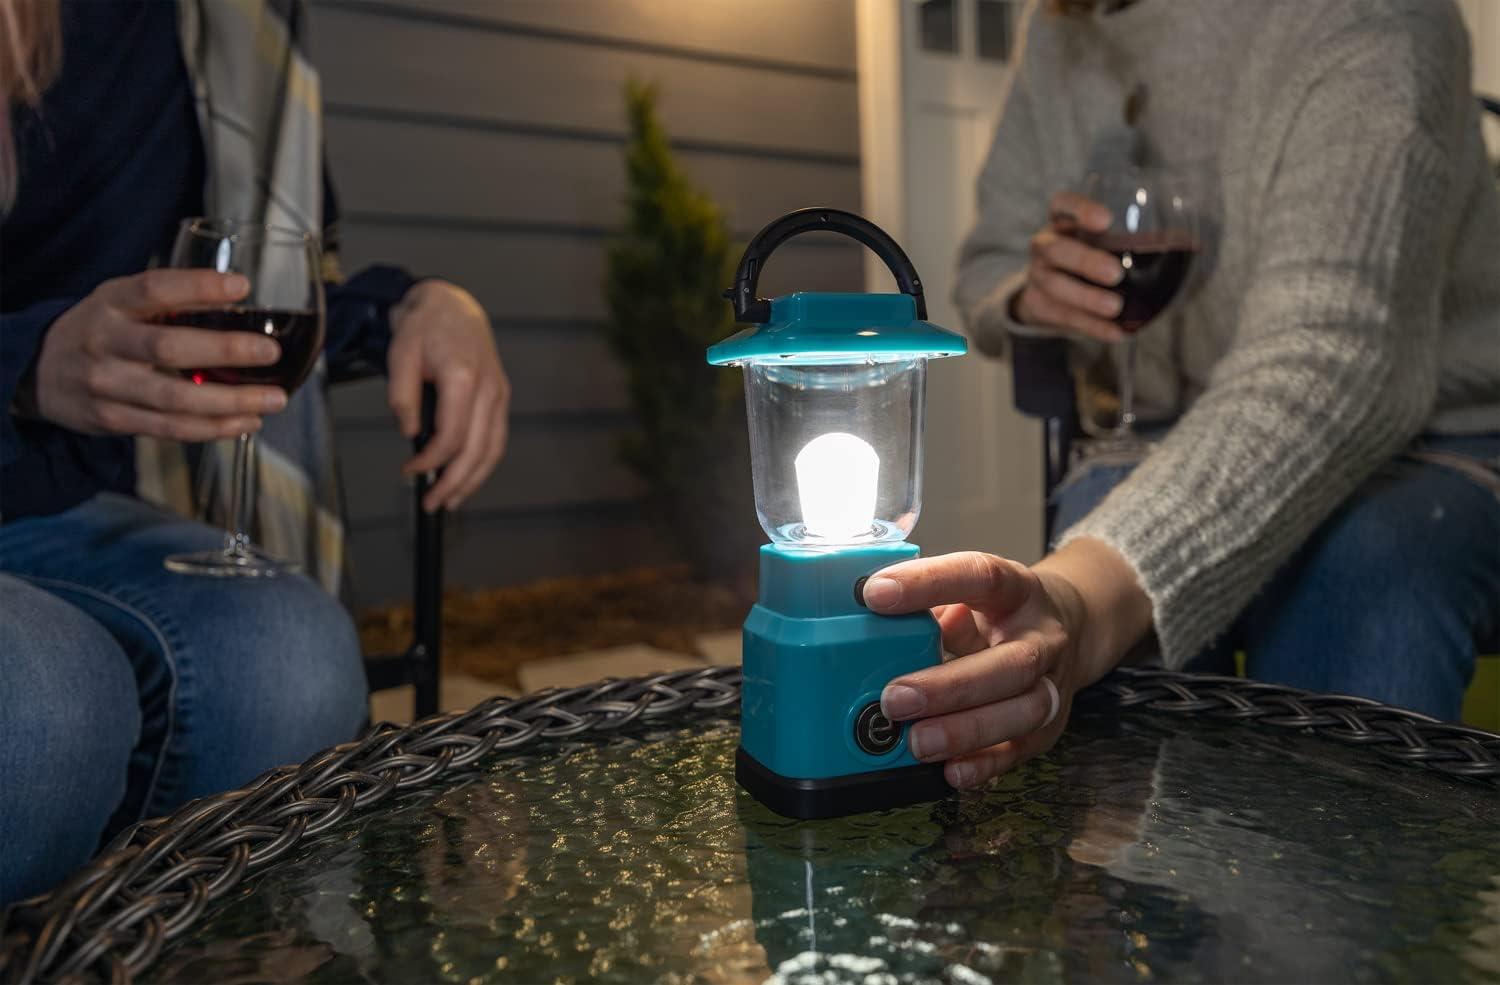 Mini Camping Lantern